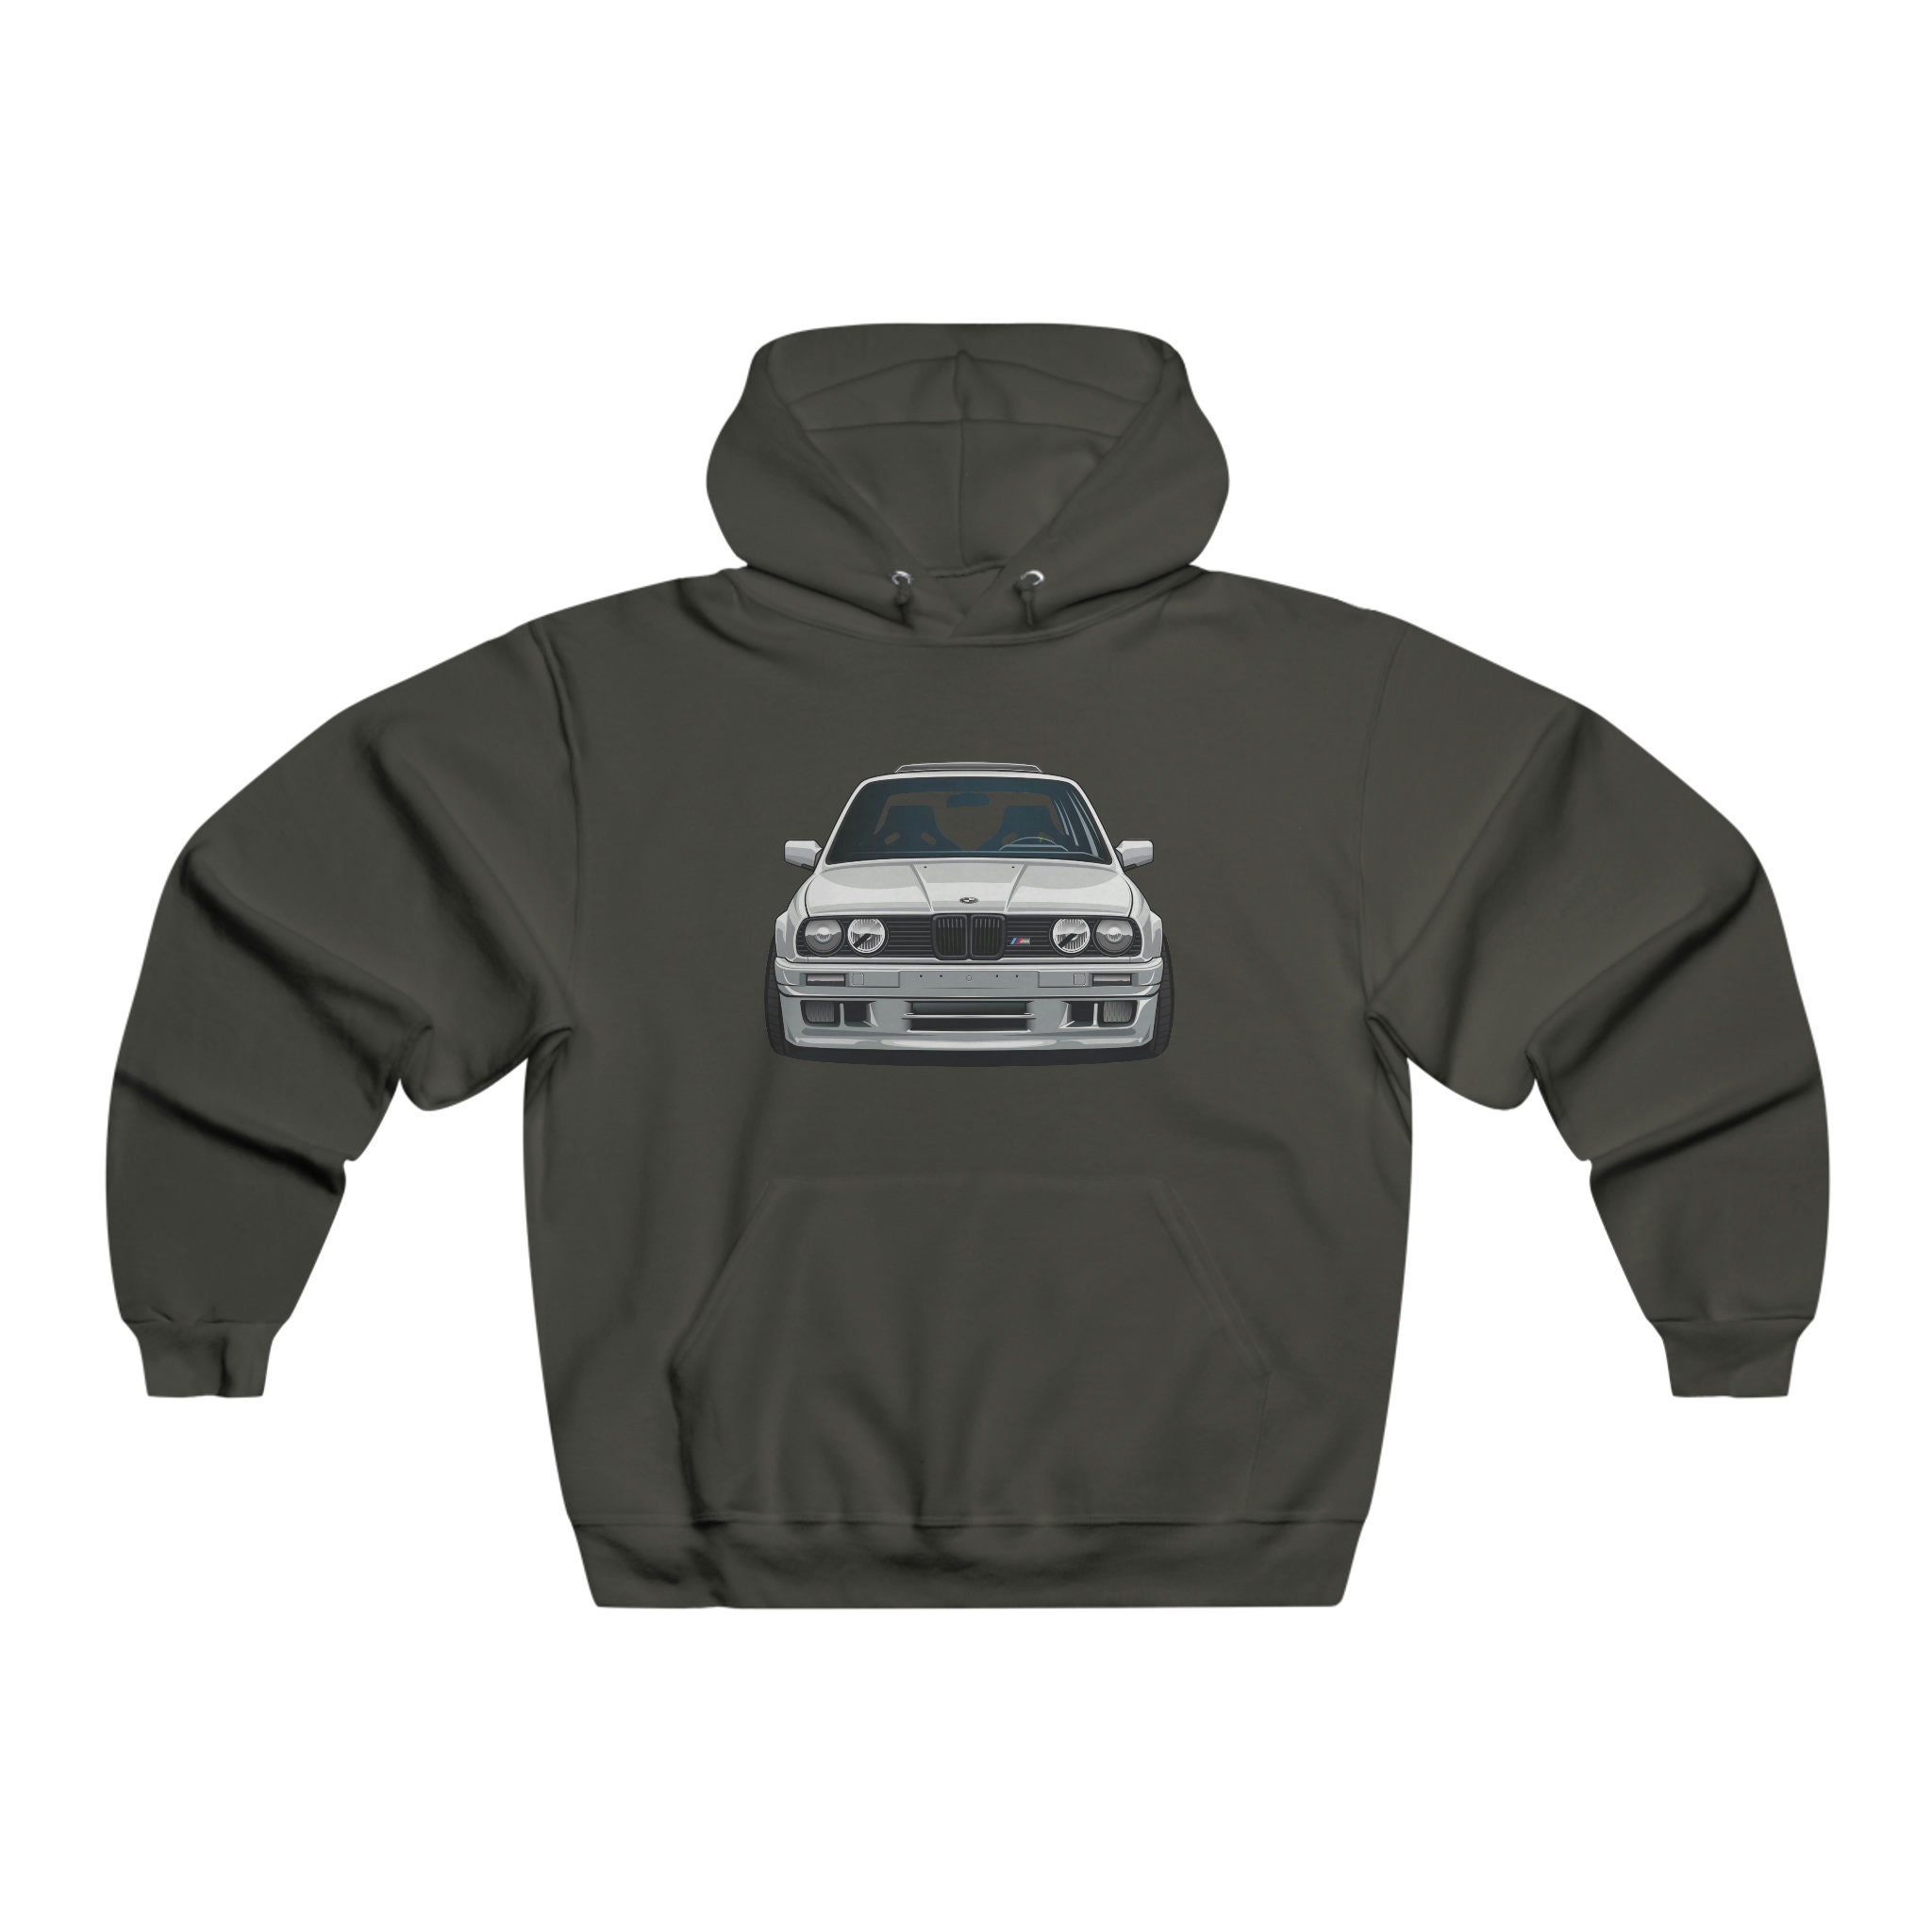 Peep the hoodie ;) . . . . . #bmw #e30 #pinke30 #cargirl #automotive